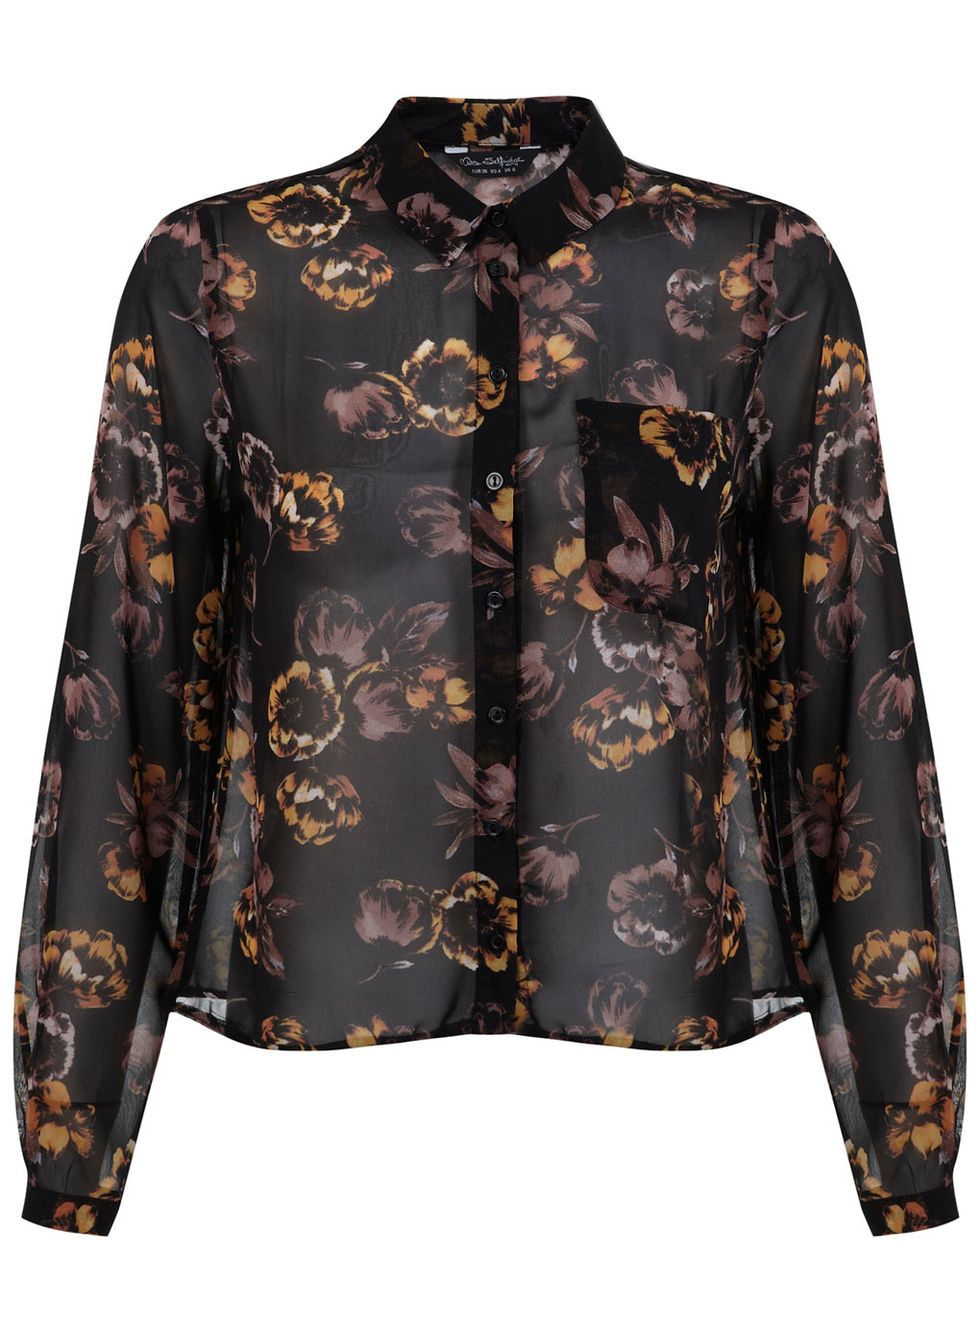 Miss Selfridge floral print blouse